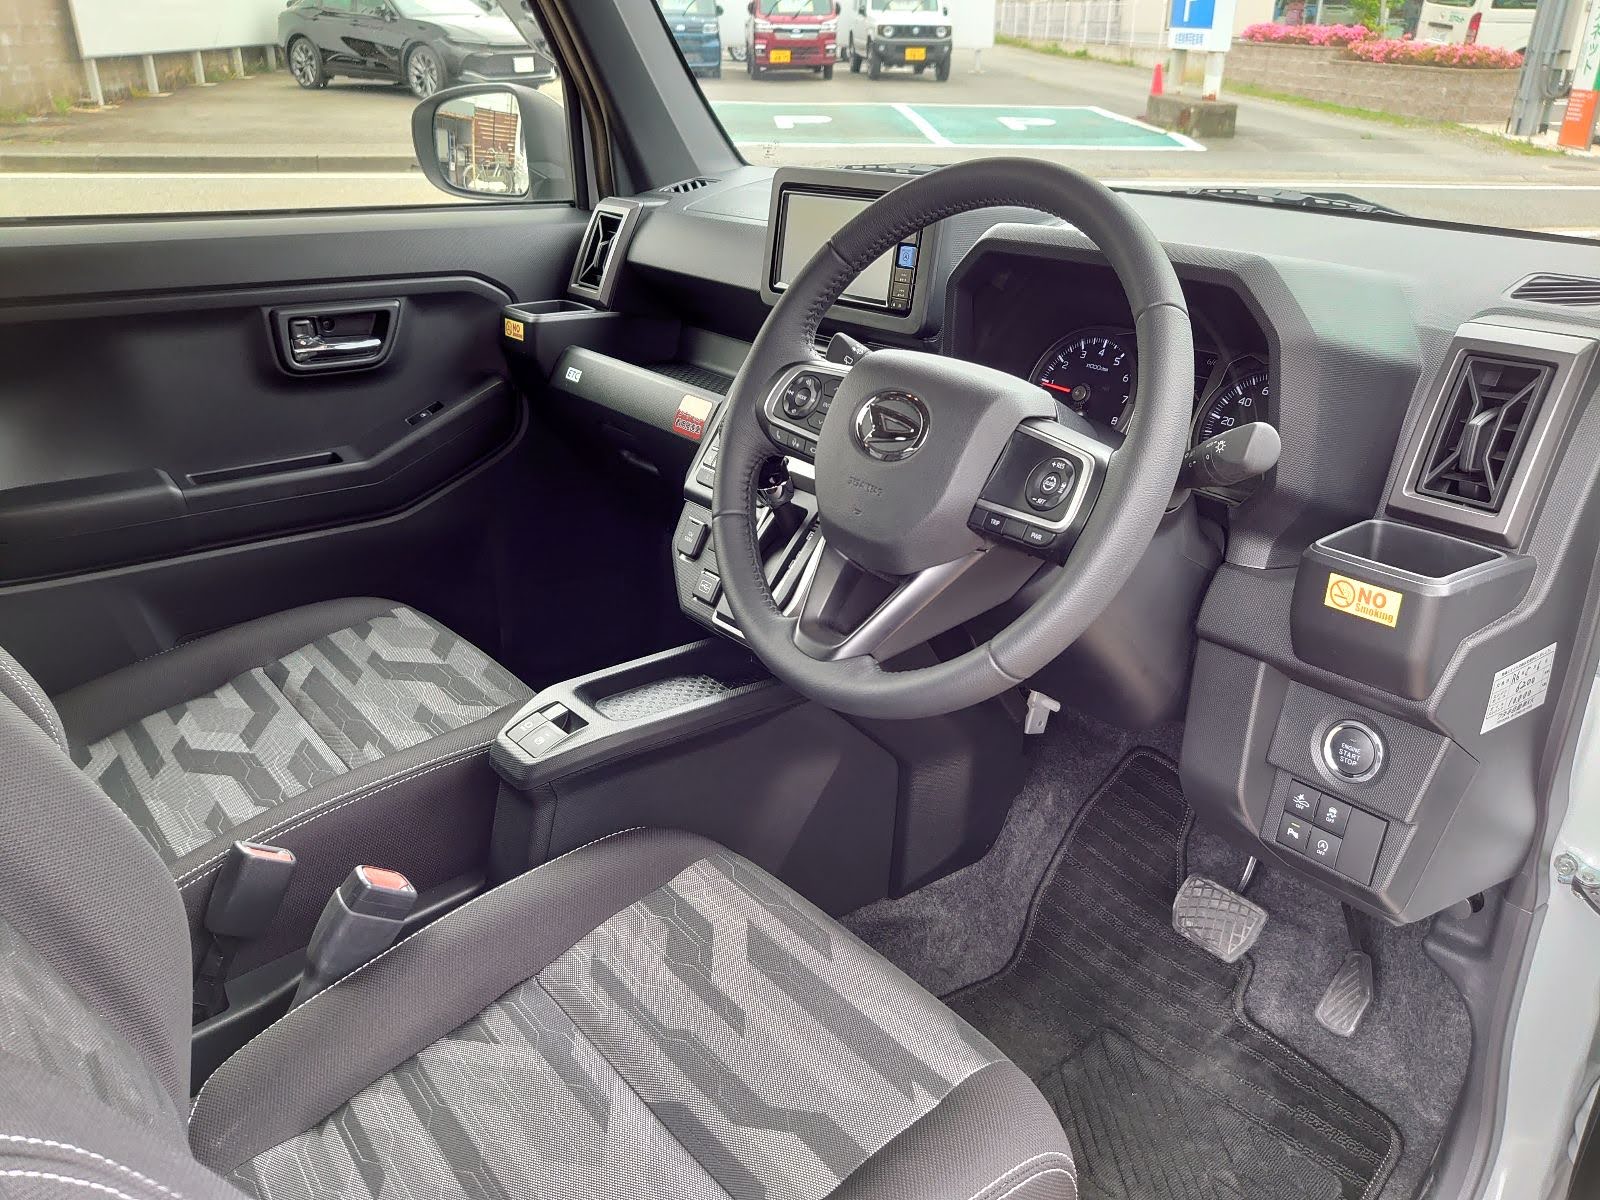 Daihatsu taft interior driver front seat